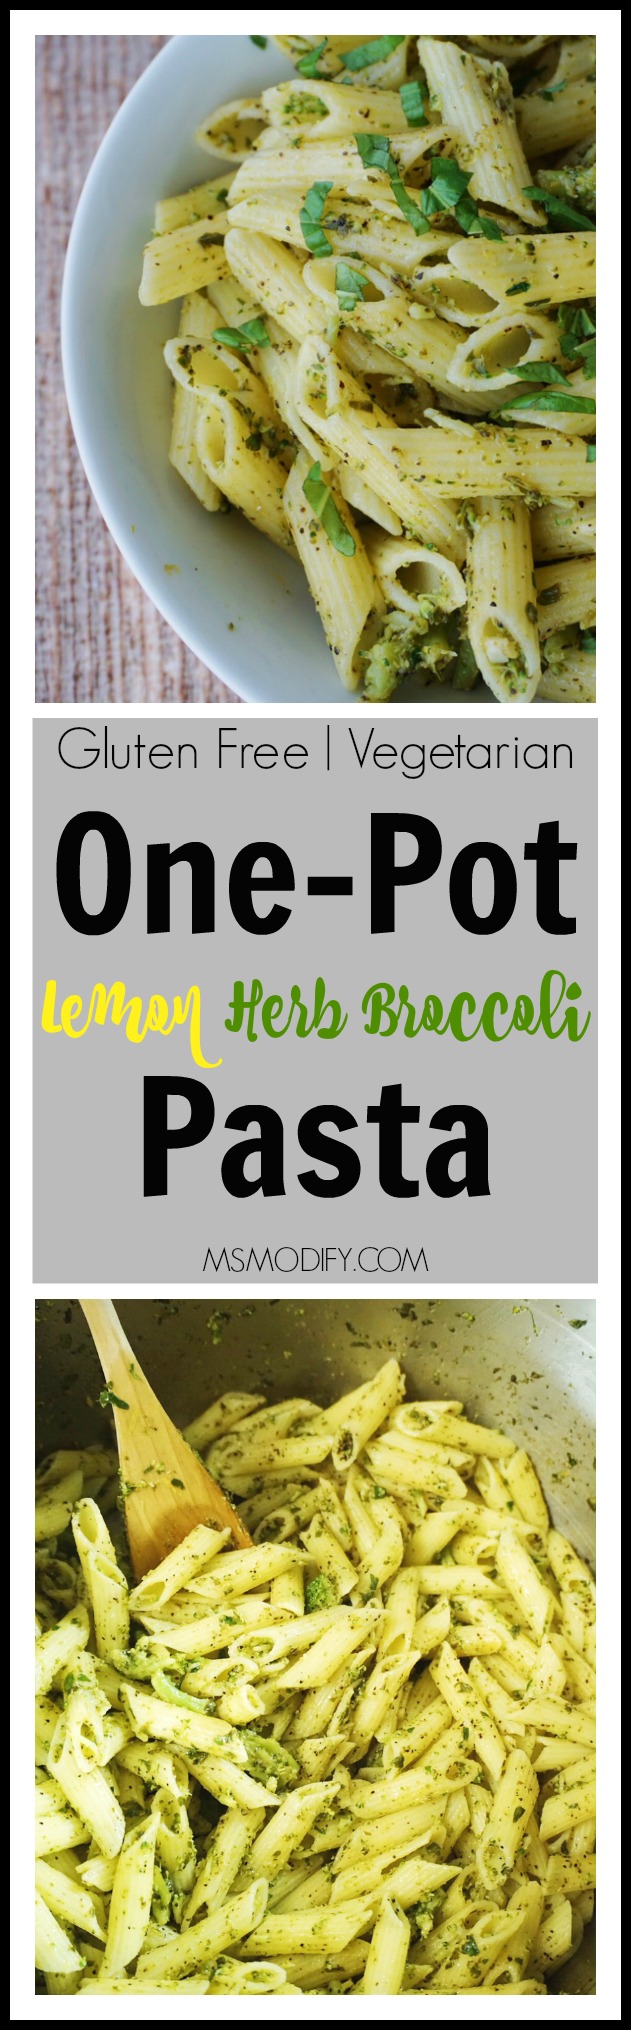 One-Pot Lemon Herb Broccoli Pasta 